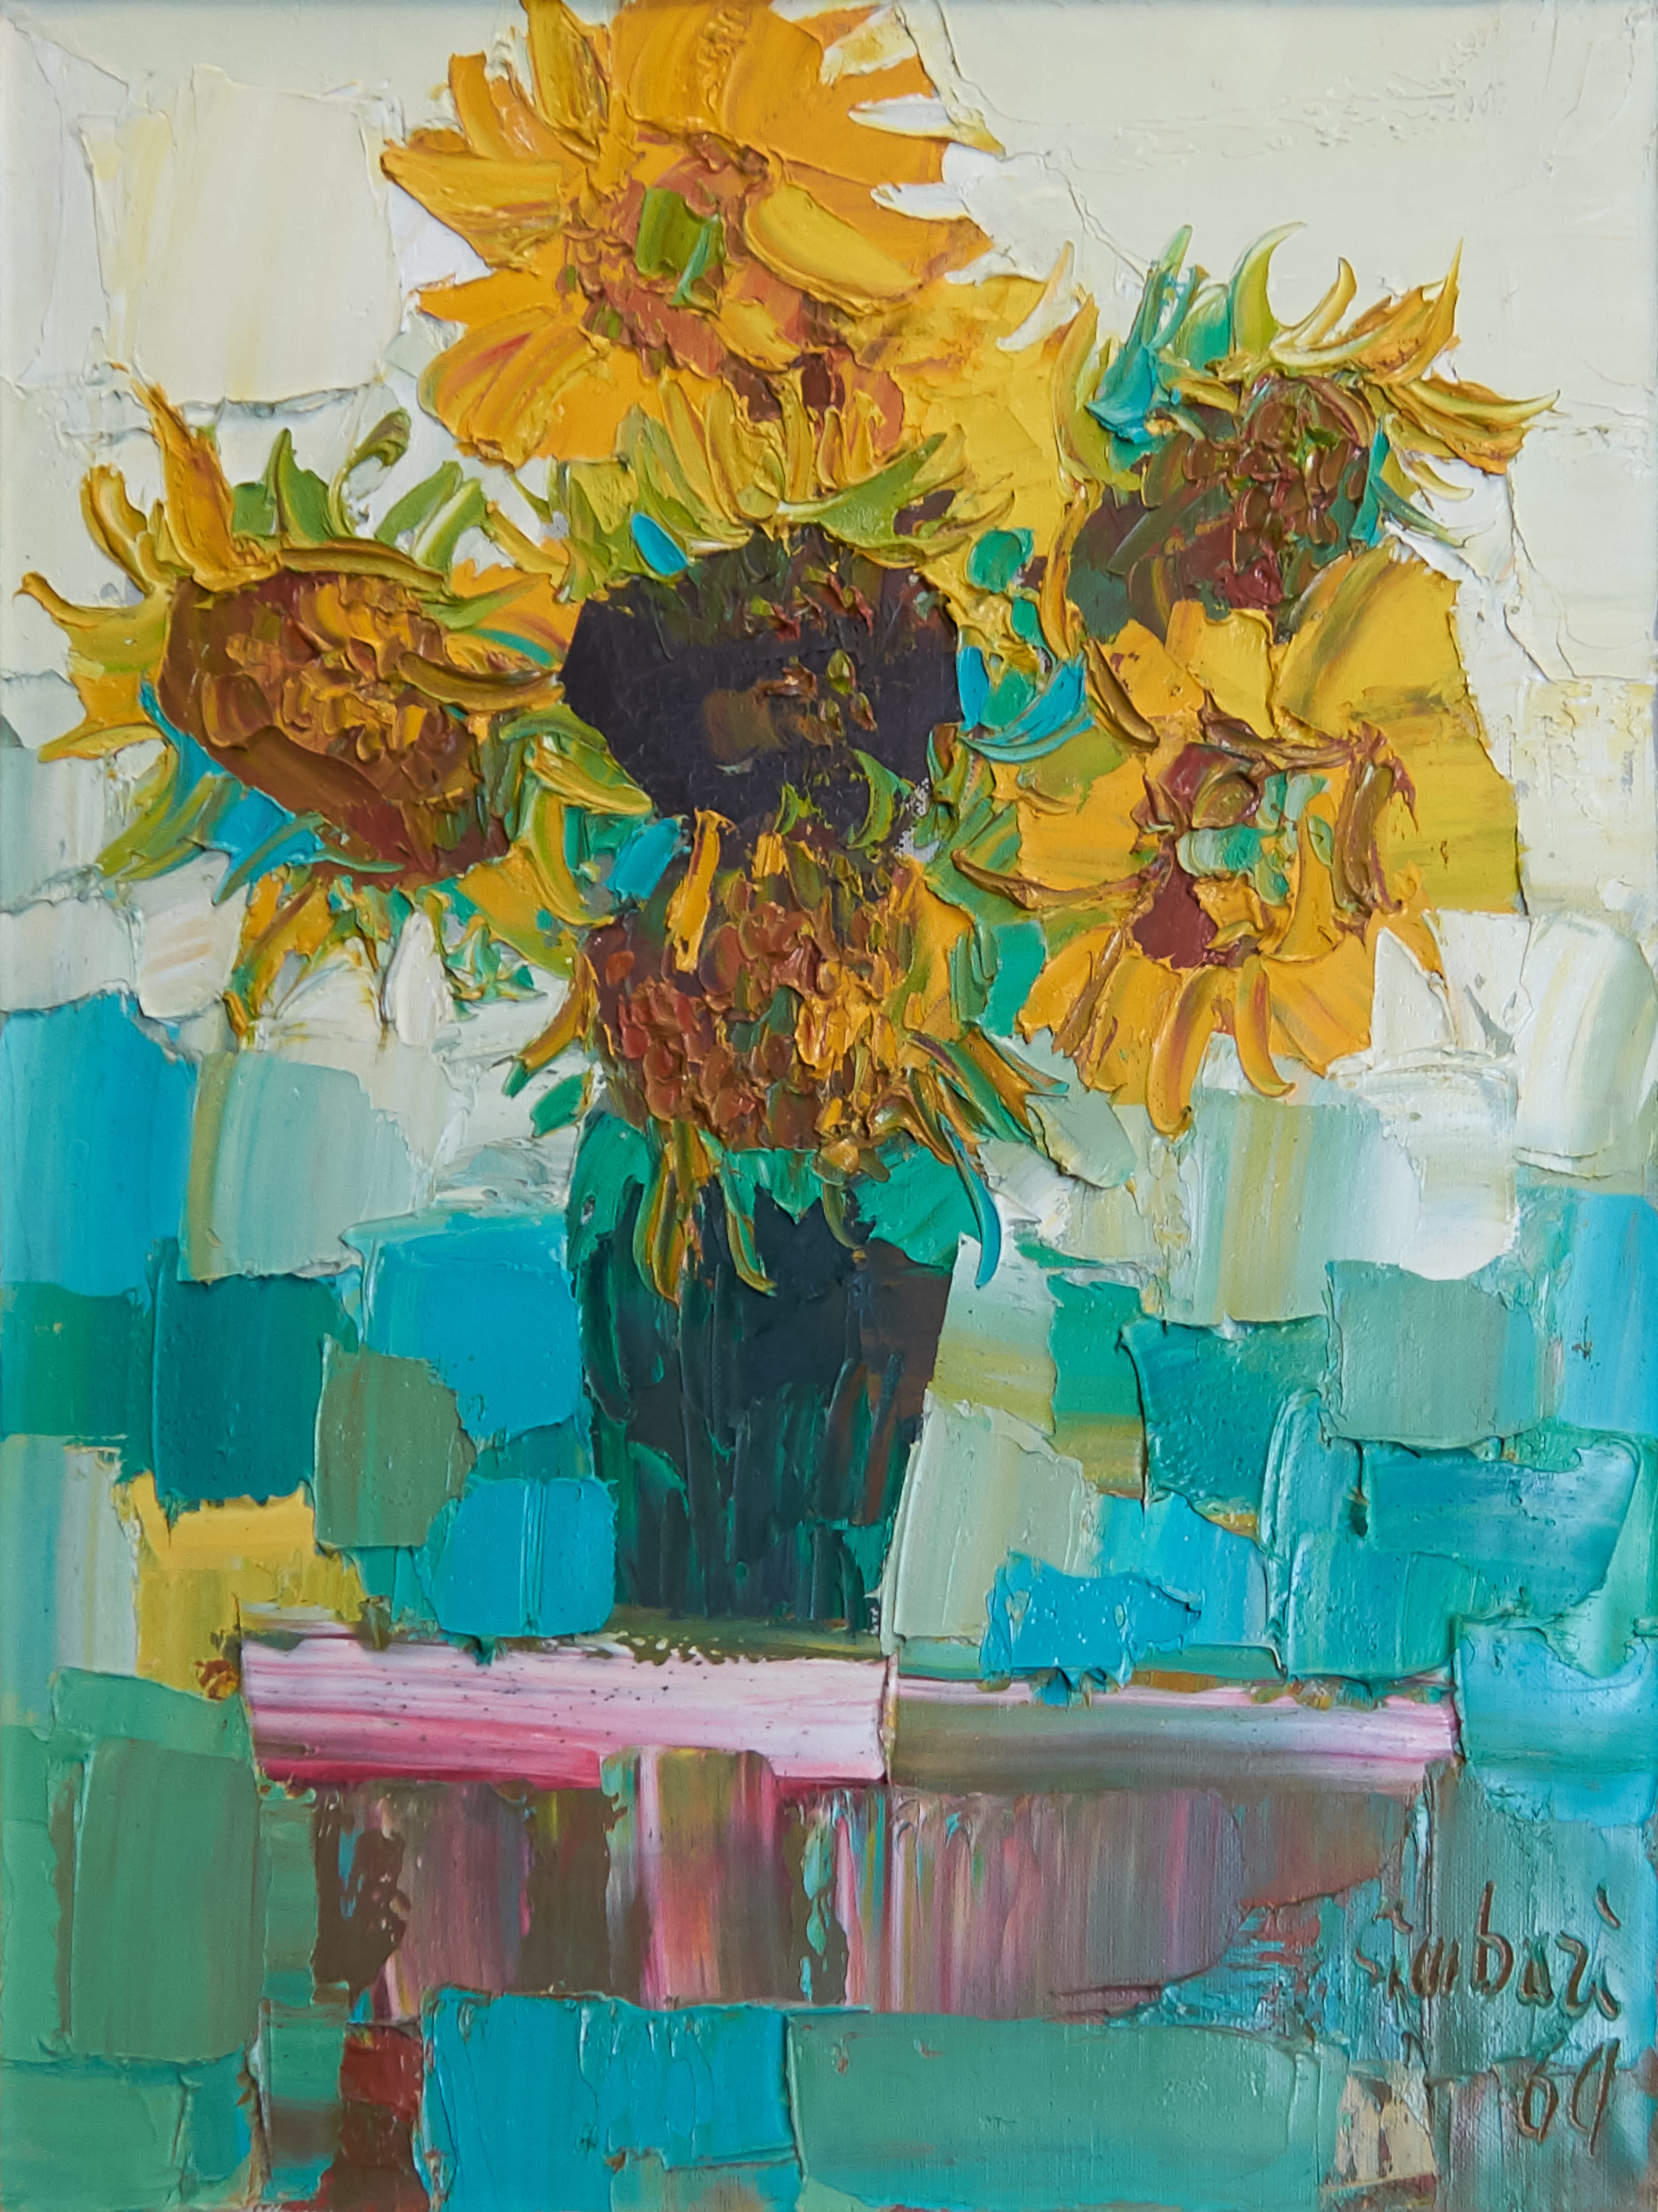 Lot 097: Nicola Simbari Still Life "Sunflowers" Oil on Canvas